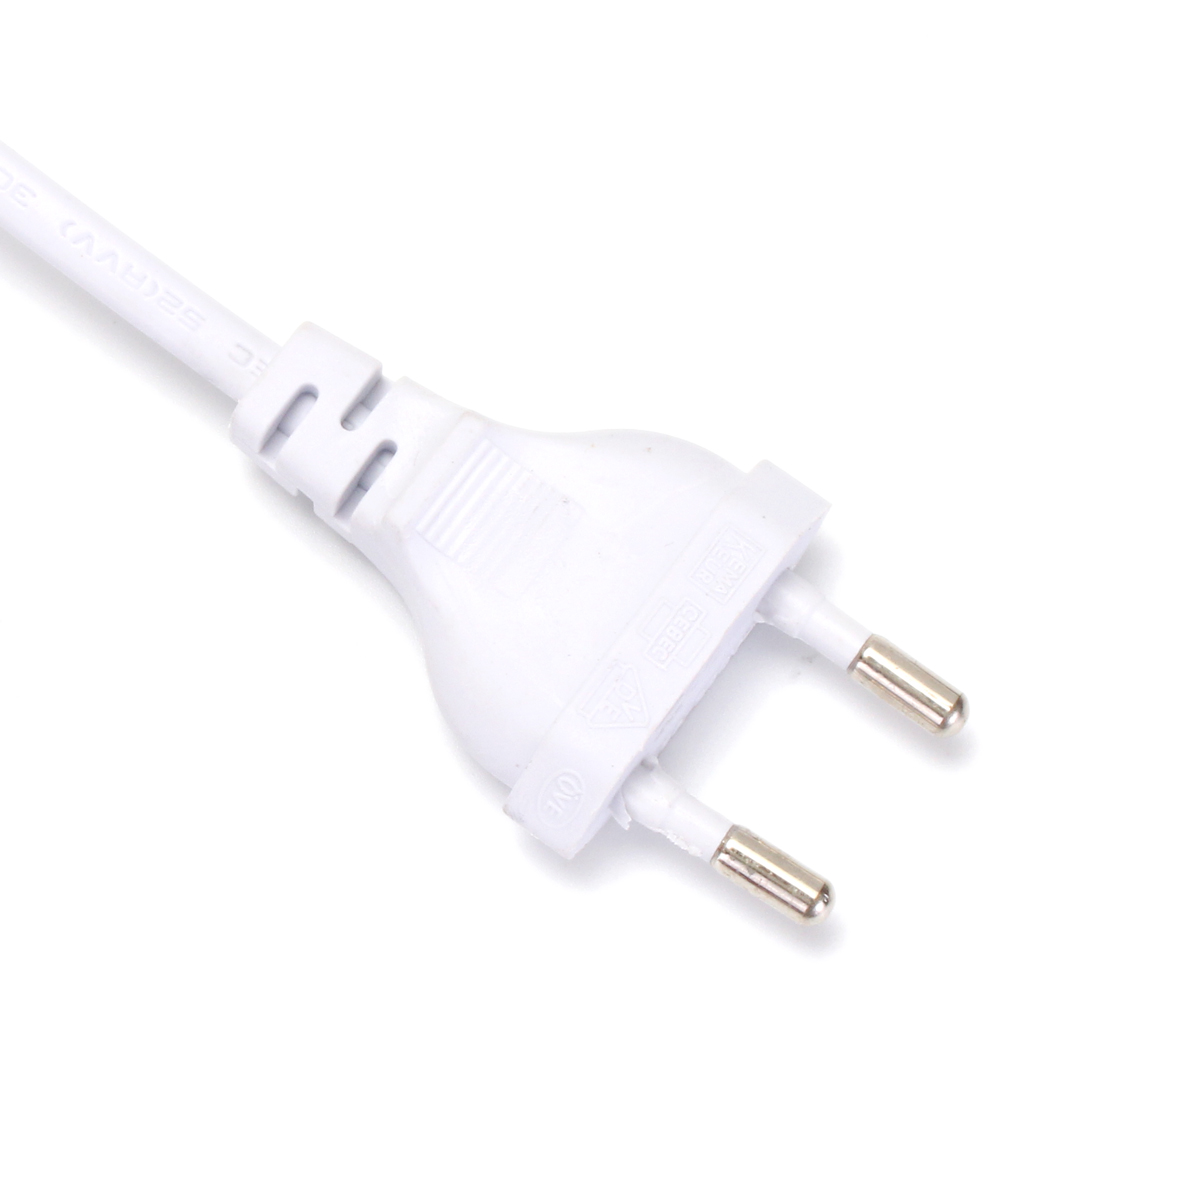 10CM-E27-Flexible-Bulb-Adapter-Lampholder-Socket-with-Clip-Dimming-Switch-EU-US-Plug-for-Pet-Light-1309715-5